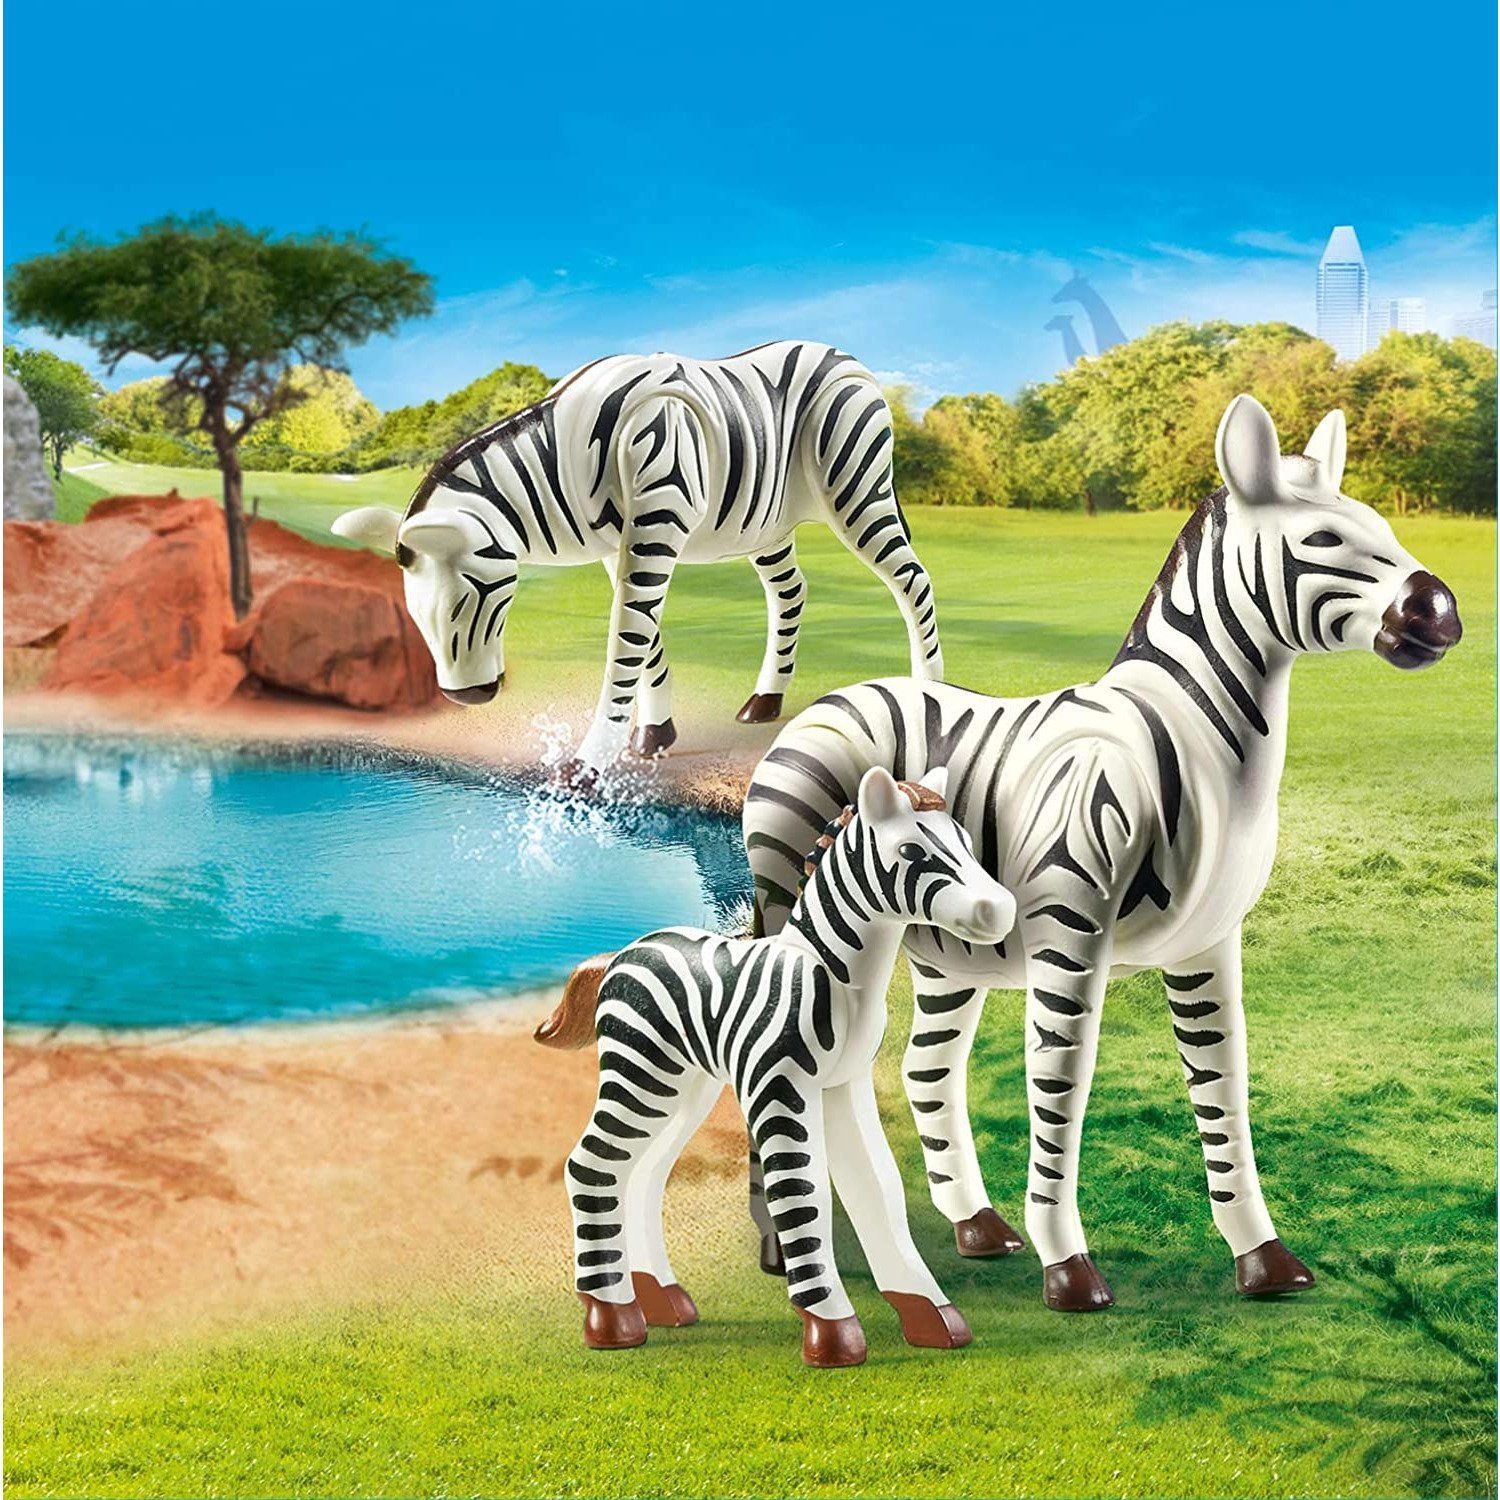 Playmobil Zebras with Foal